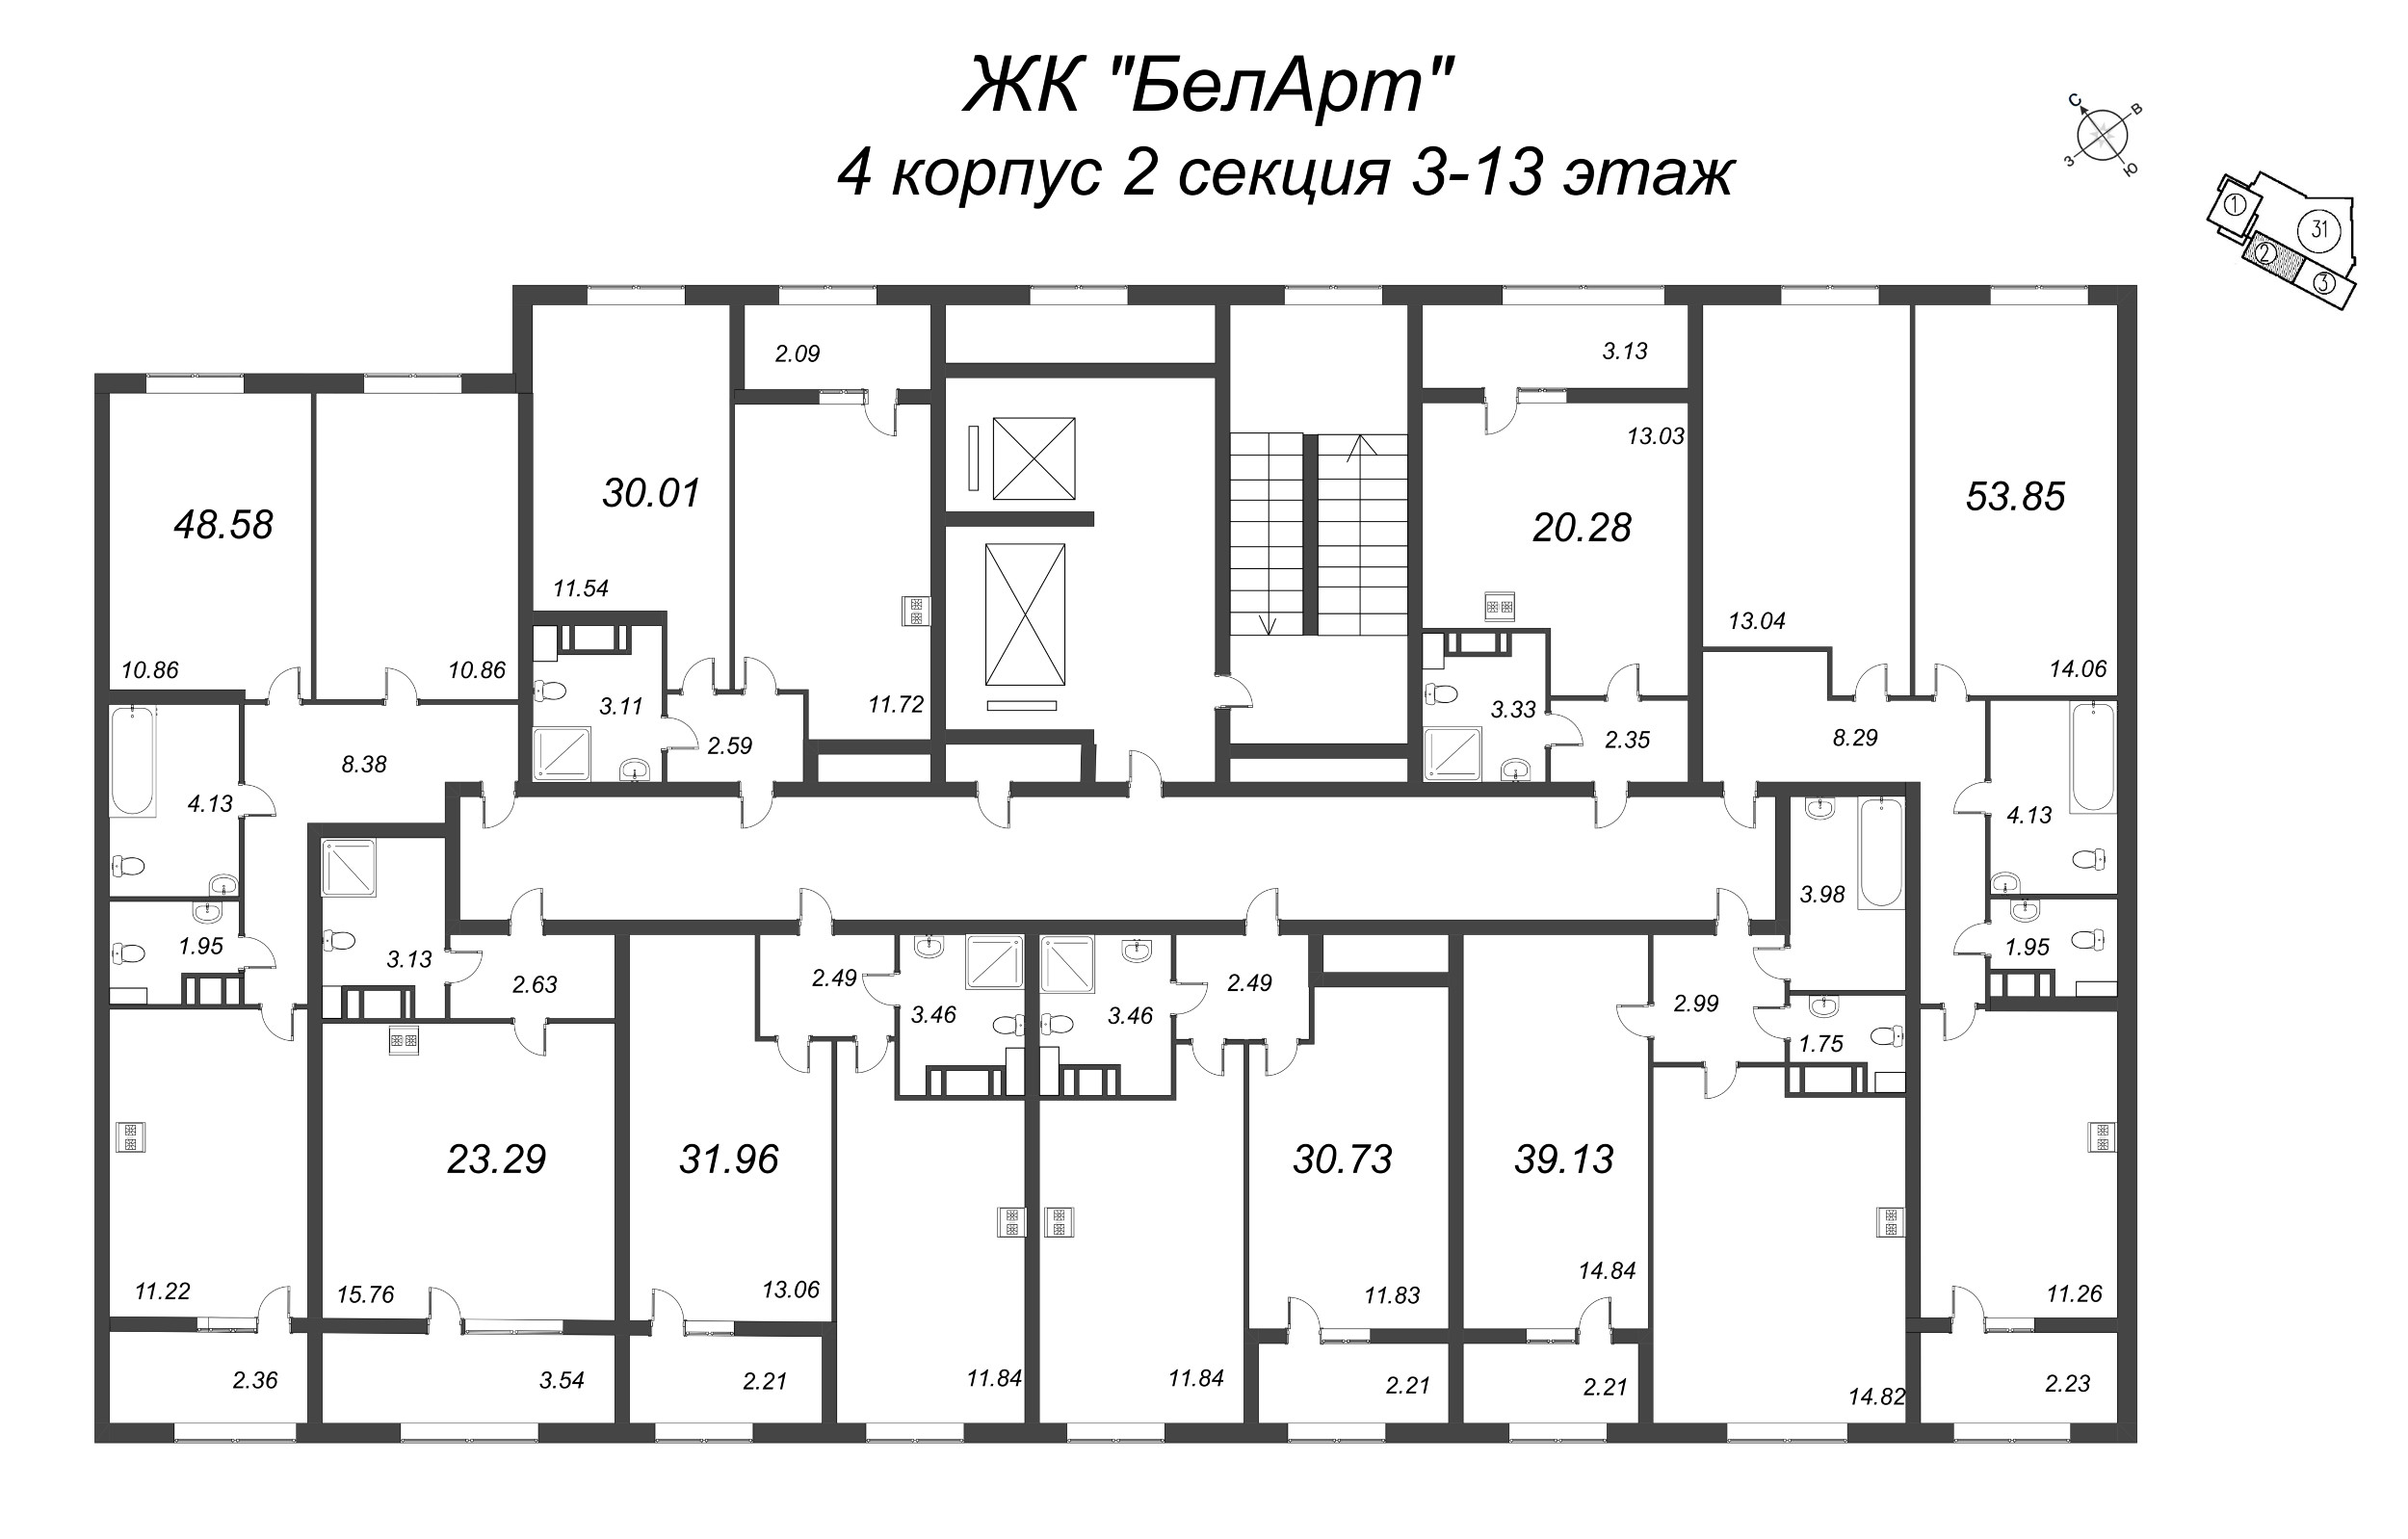 2-комнатная (Евро) квартира, 30.73 м² - планировка этажа